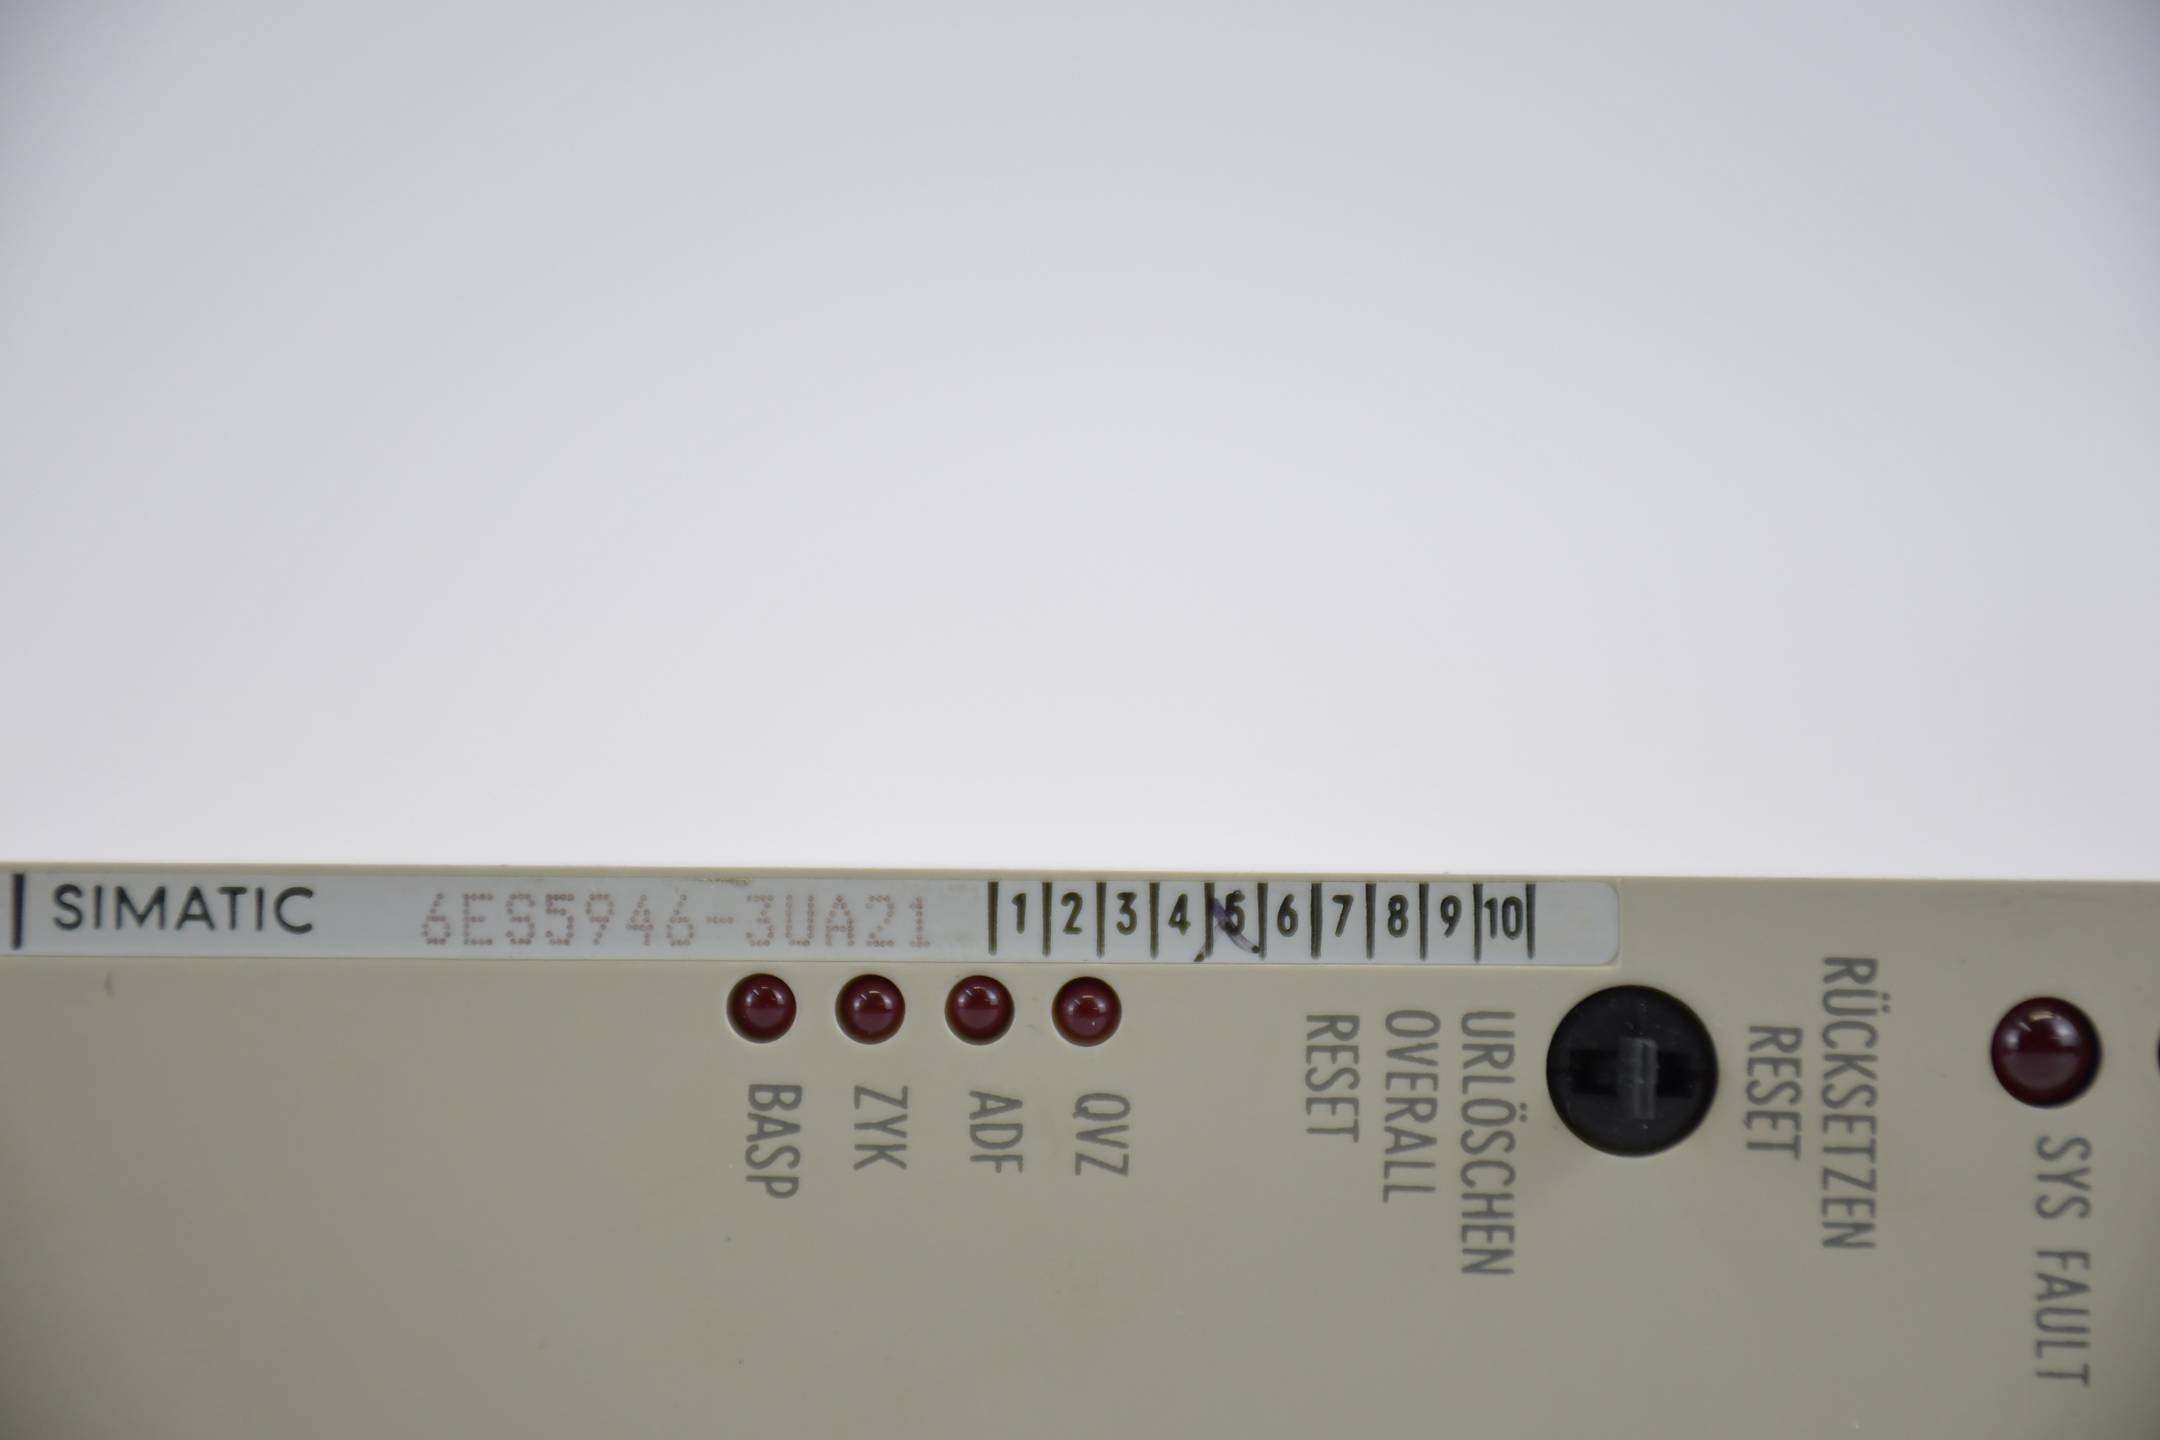 Siemens simatic S5 CPU 946/947 Zentralbaugruppe 6ES5946-3UA21 ( 6ES5 946-3UA21 )